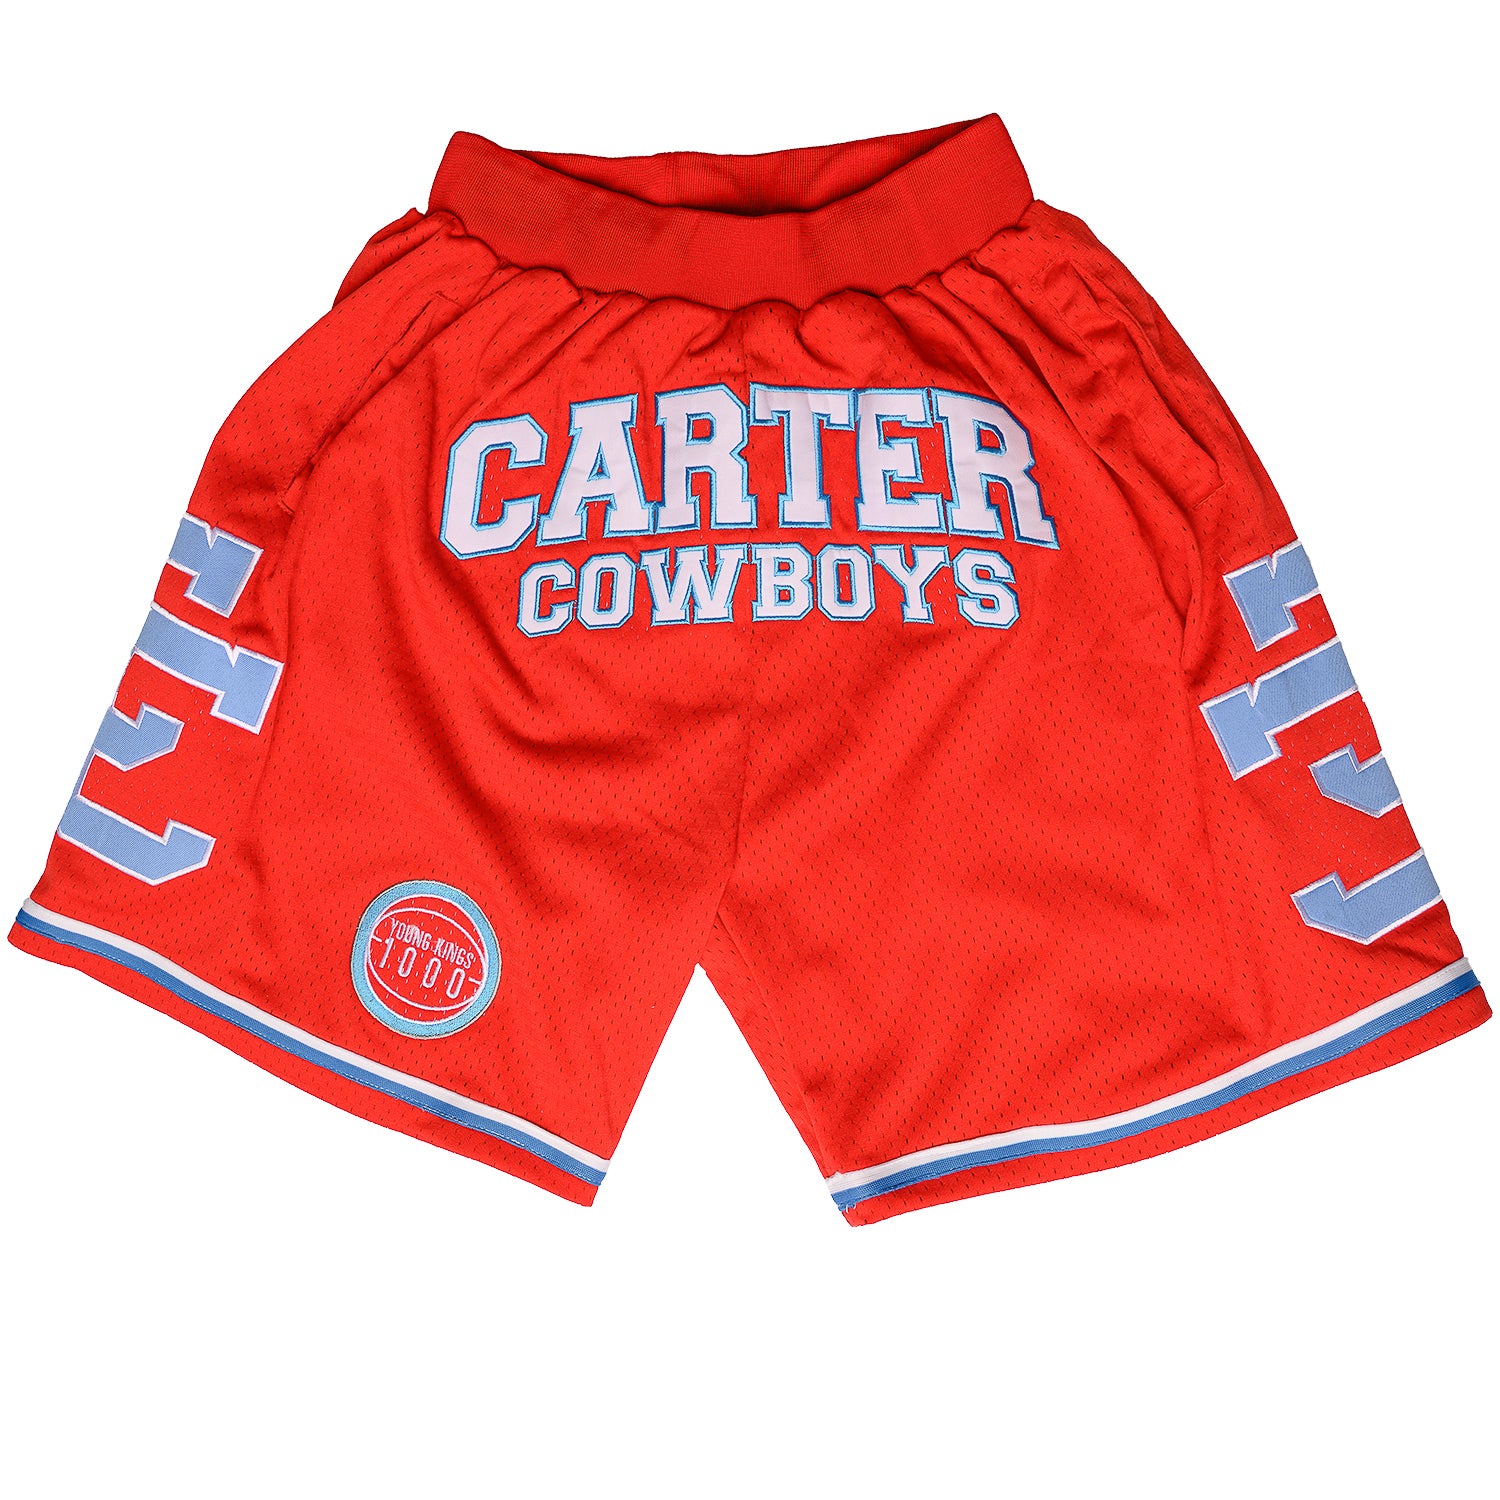 Dallas Carter Basketball Shorts Red